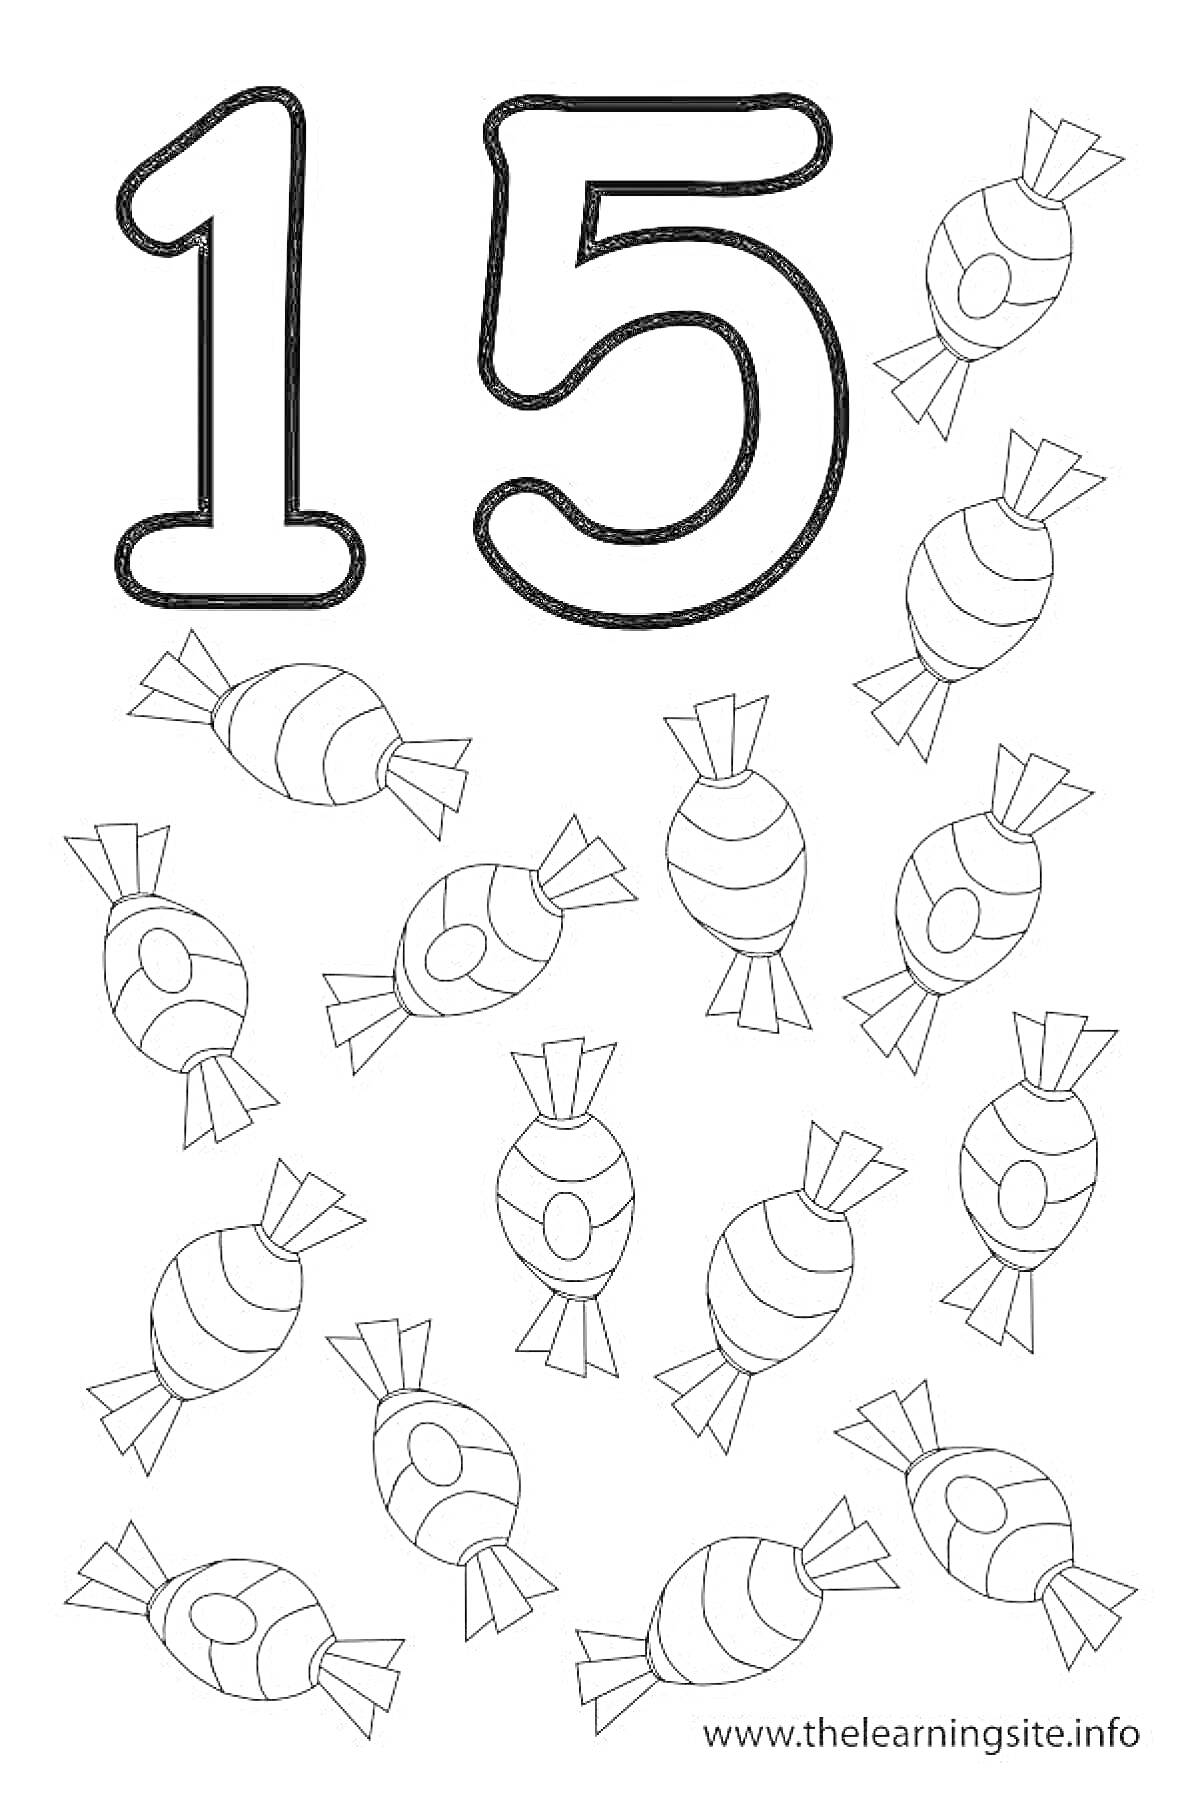 Раскраска Цифра 15 с девятнадцатью конфетами для раскрашивания